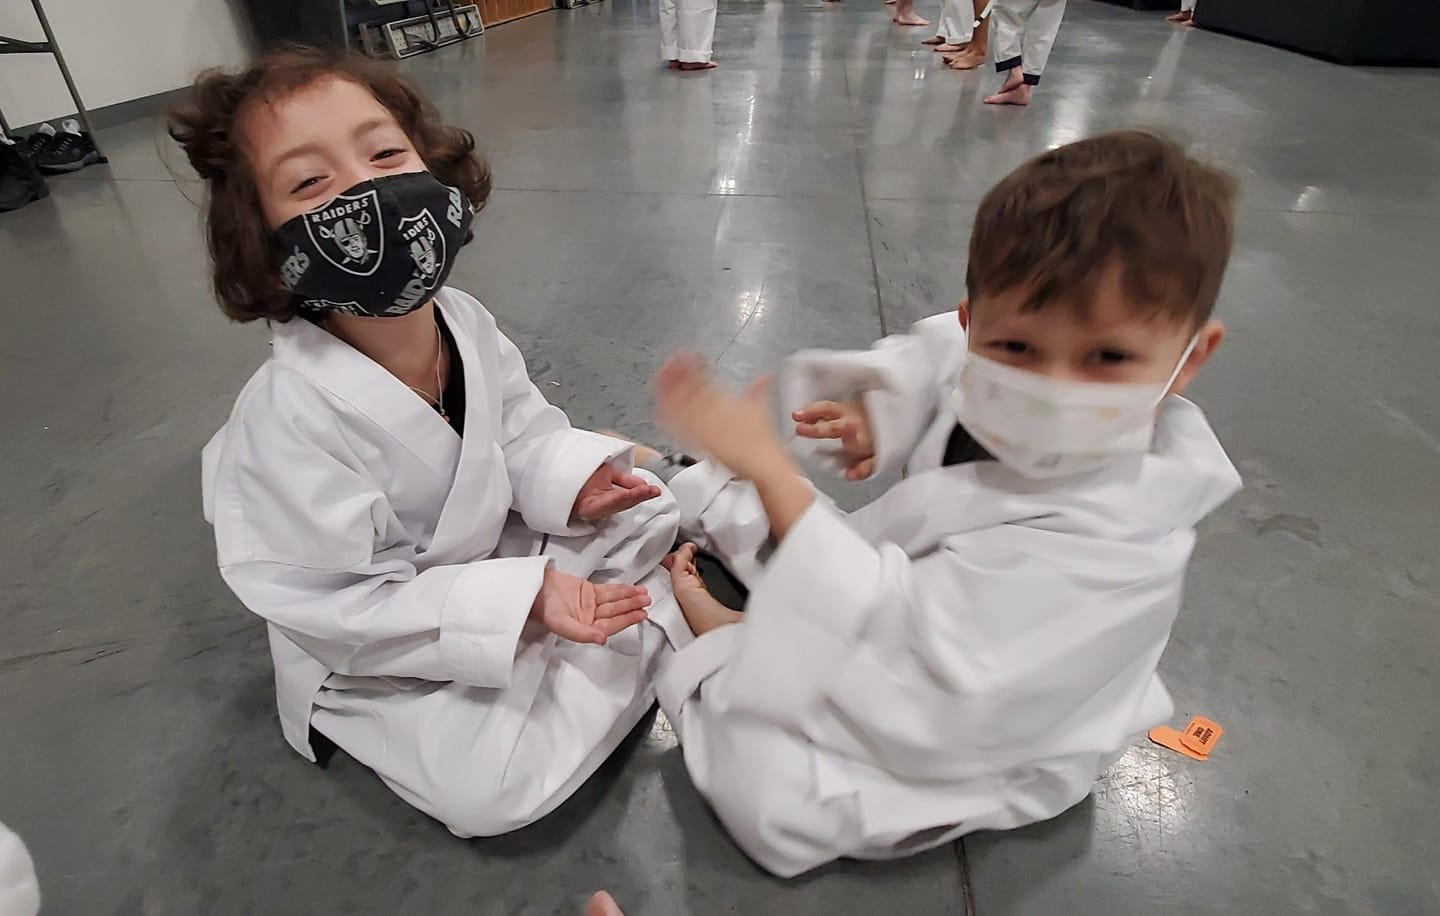 karate with a friend child development center